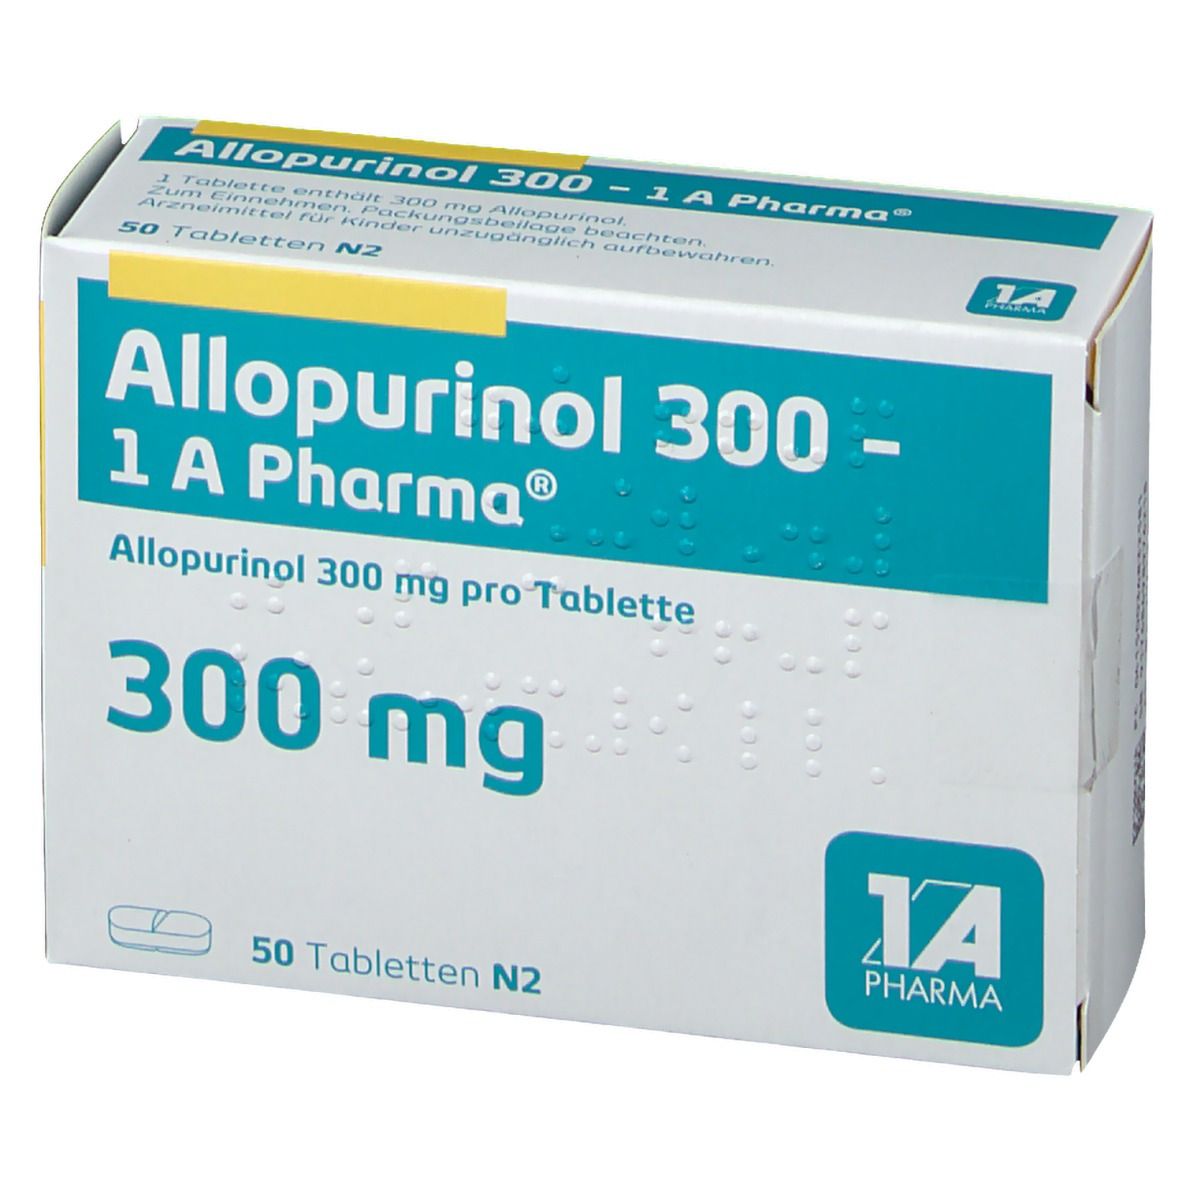 Allopurinol 300 - 1 A Pharma®